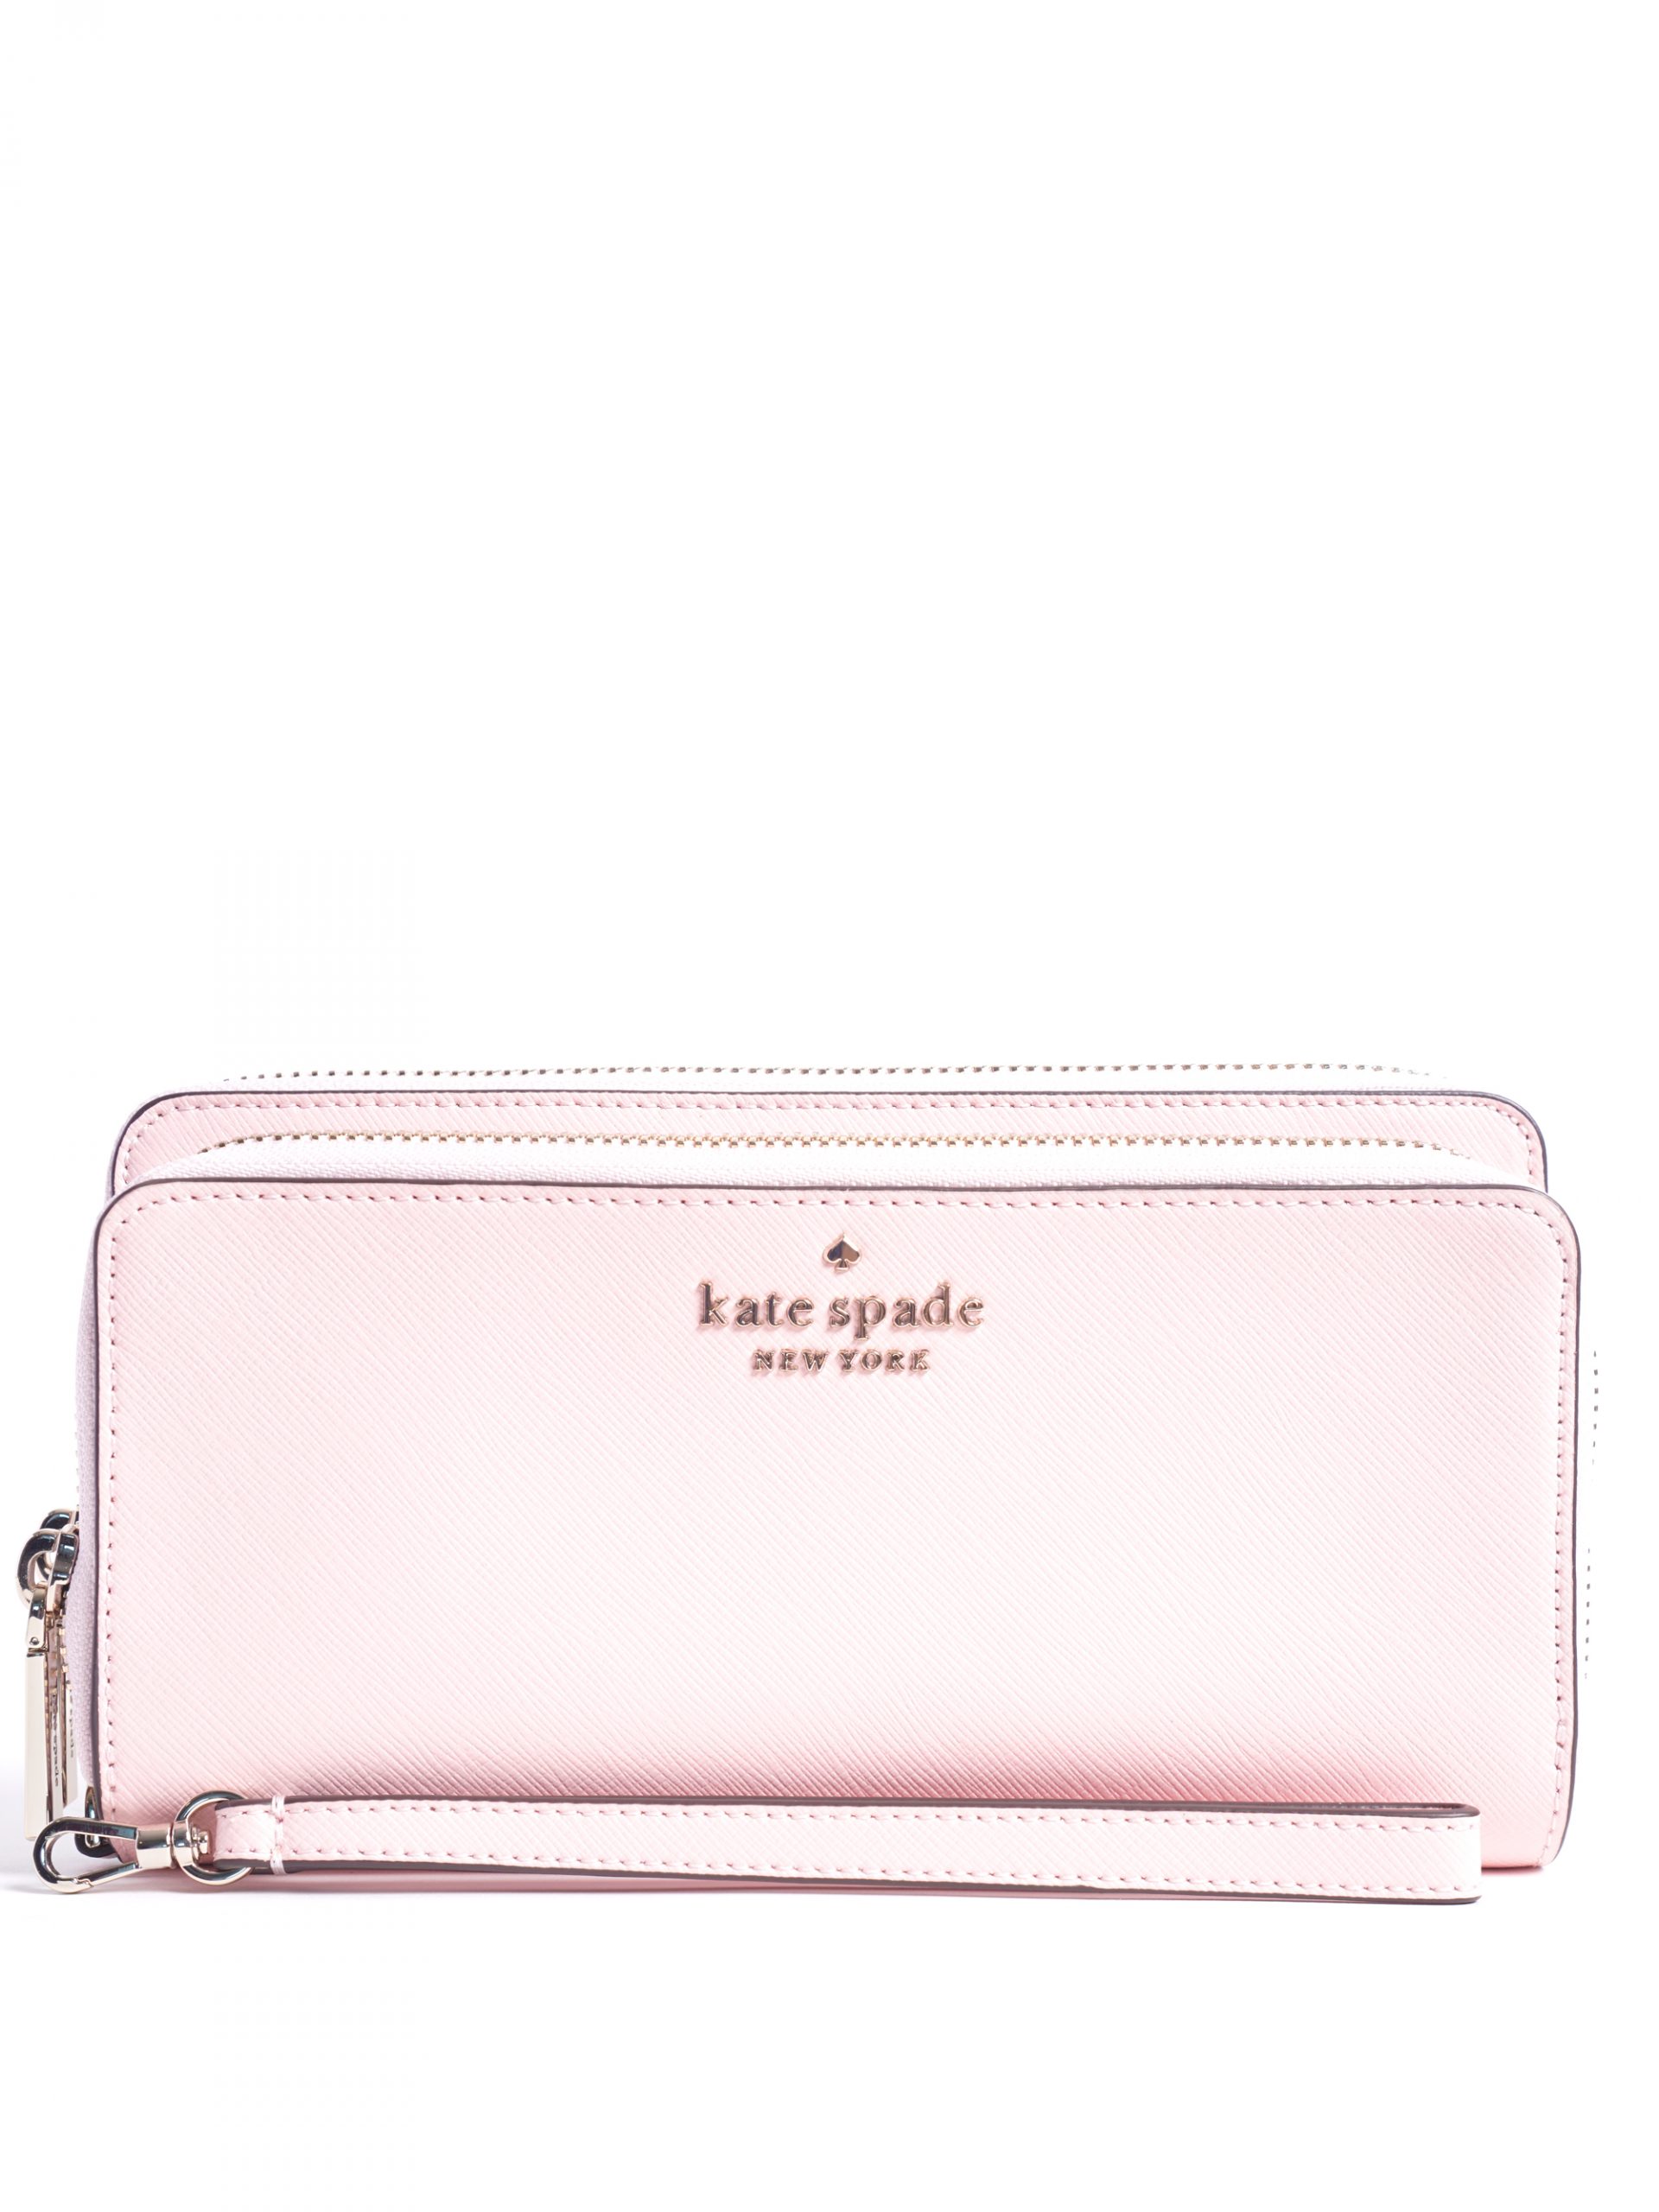 Kate Spade Staci Large Carryall Wallet Wristlet Chalk Pink - Averand